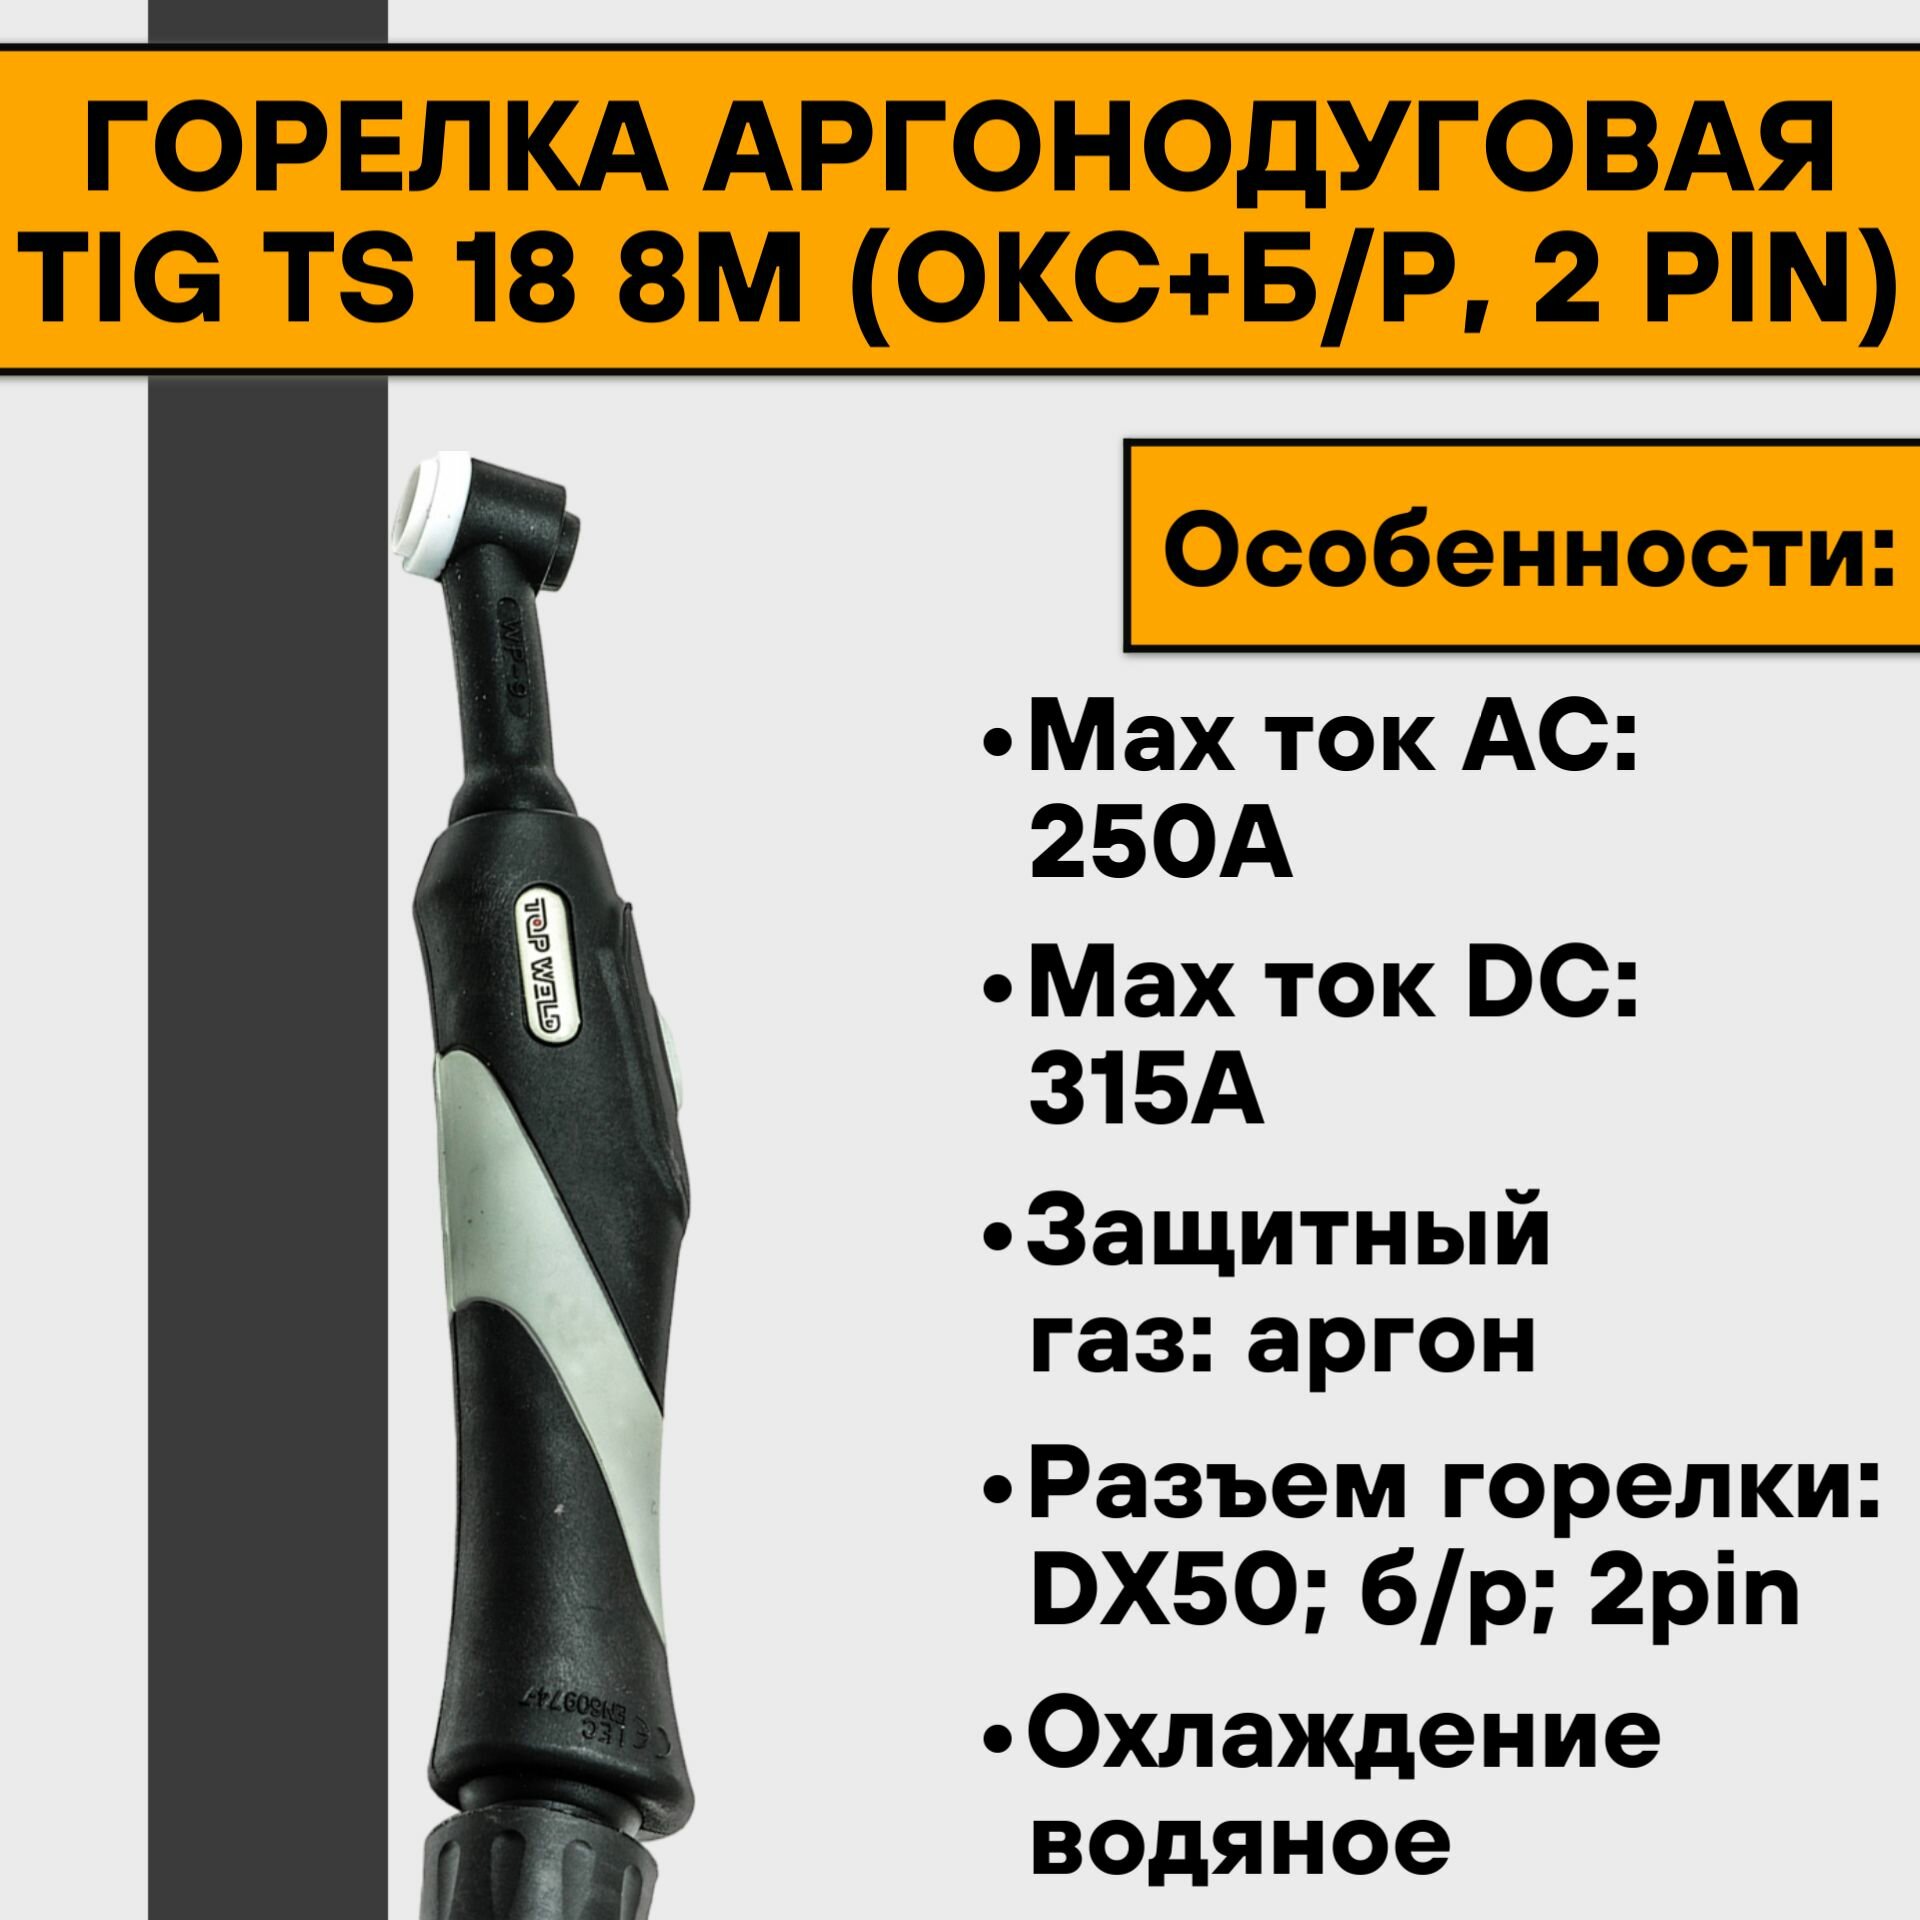 Горелка аргонодуговая TIG TS 18 8м (ОКС+б/р 2 pin)